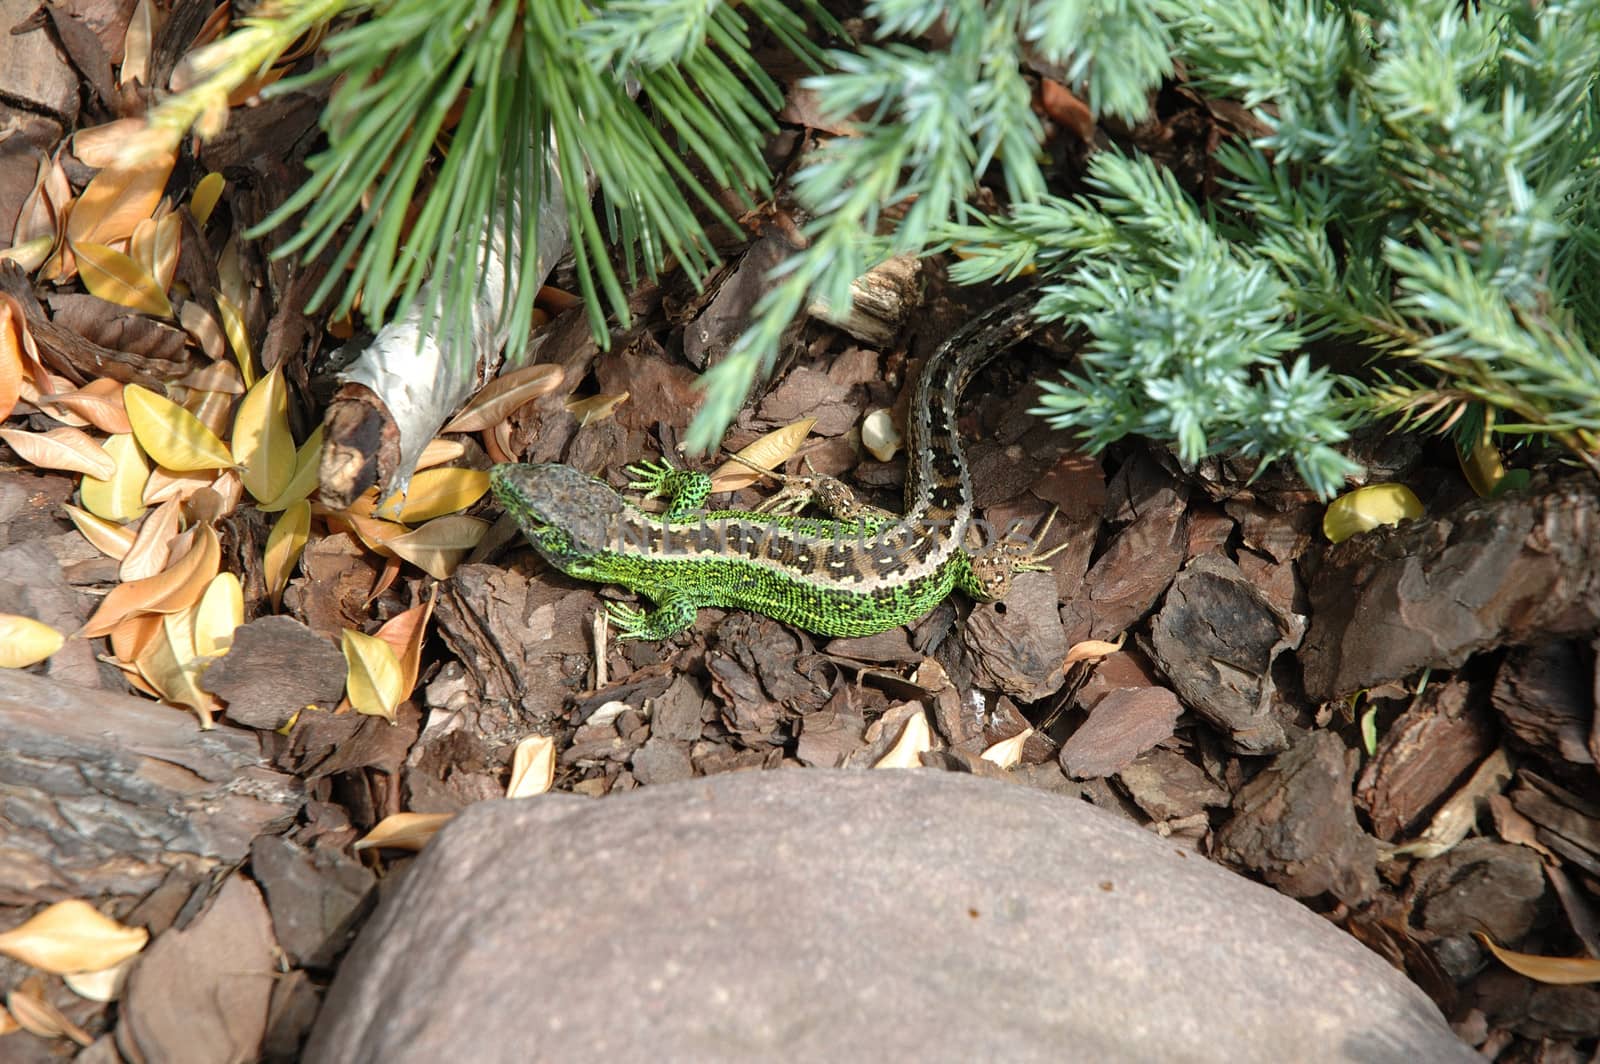 Lizard walking through bushes in garden